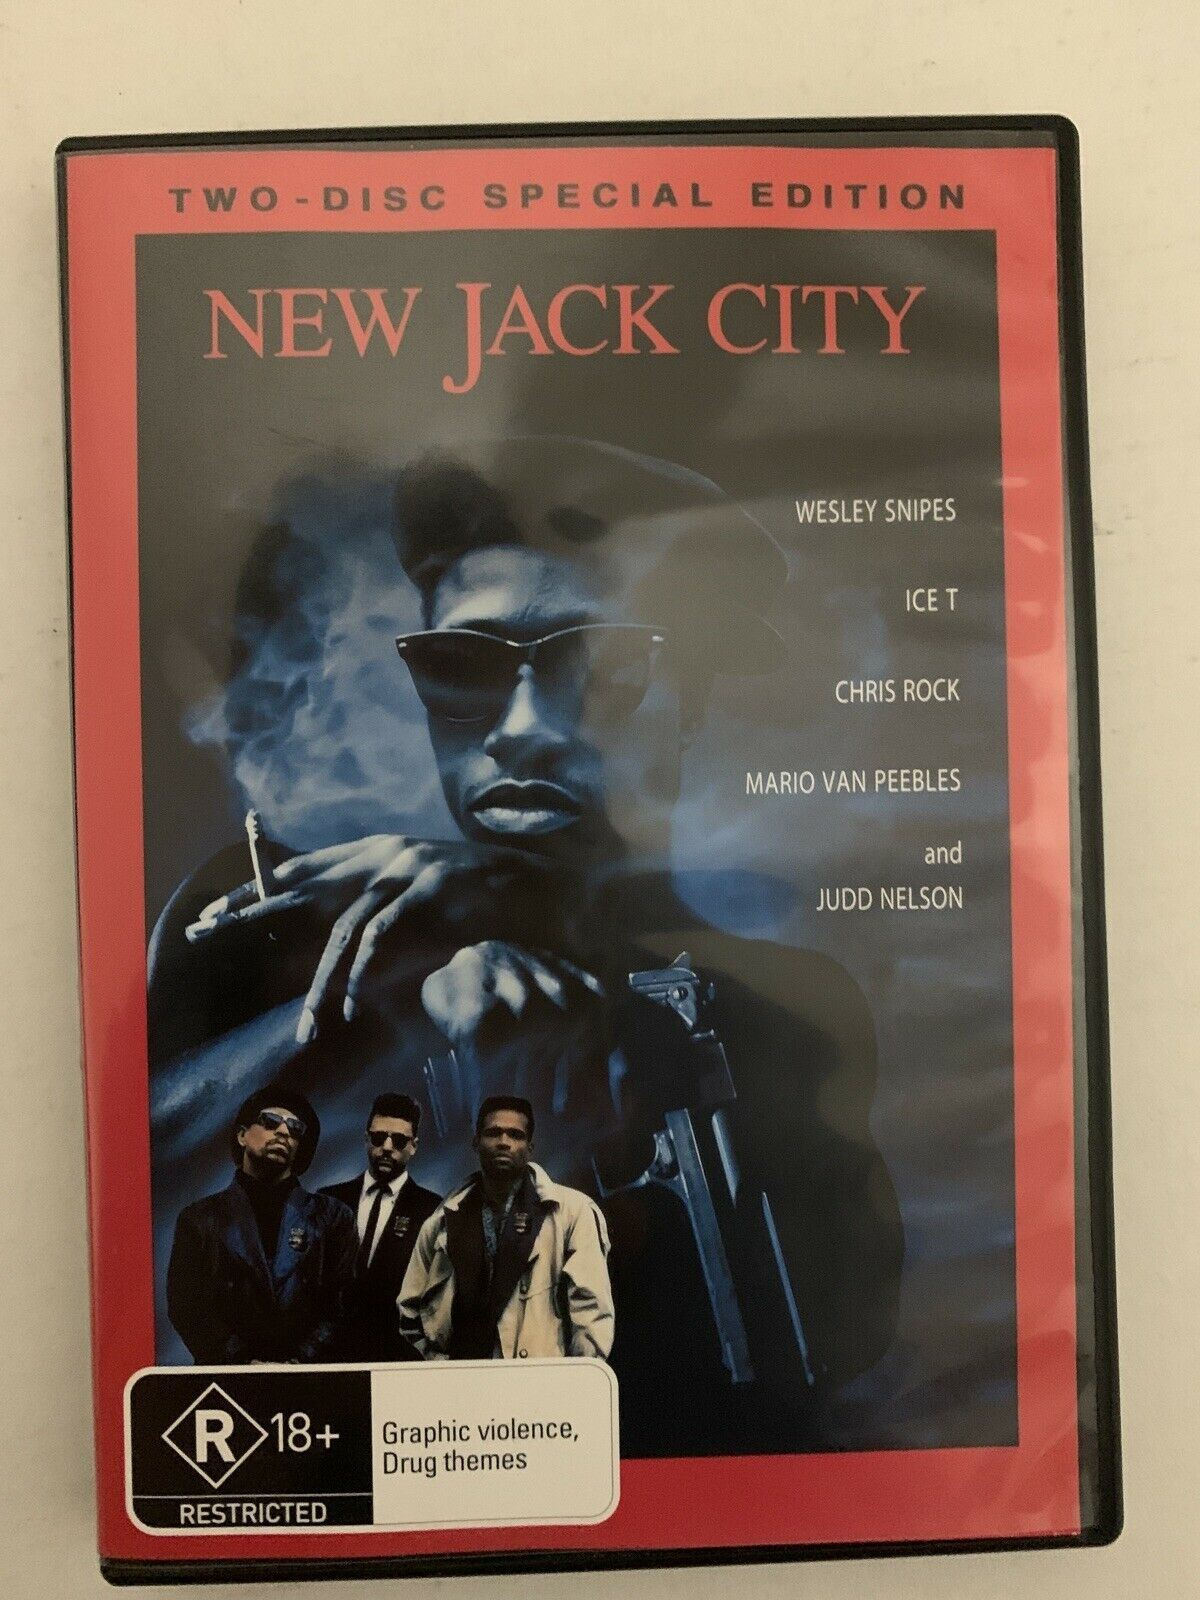 New Jack City - Special Edition (DVD, 1991) Wesley Snipes, Chris Rock. Region 4